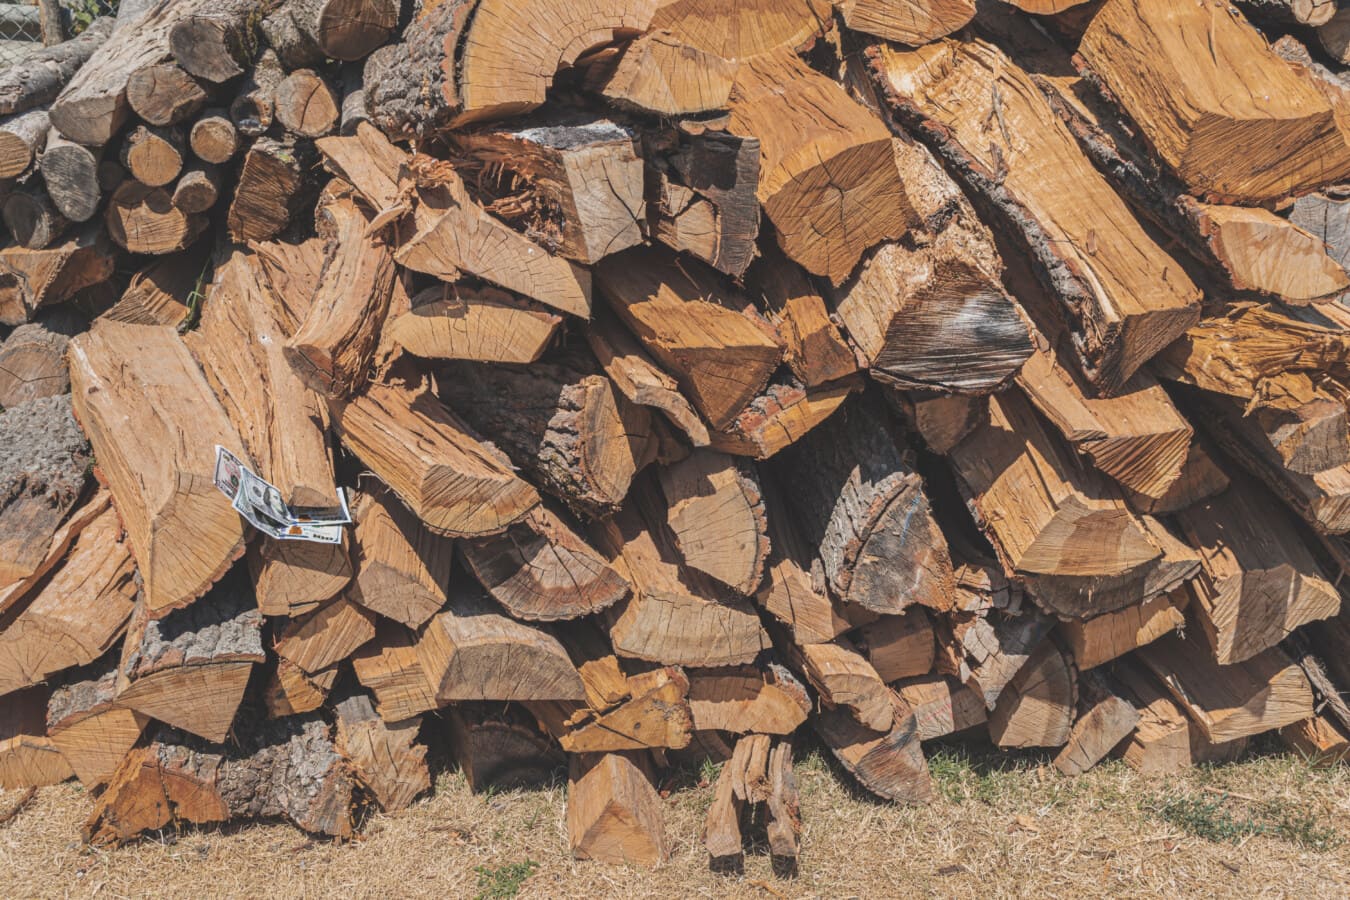 oak, purchase, hardwood, firewood, fuel, price, logging, nature, stacks, wood